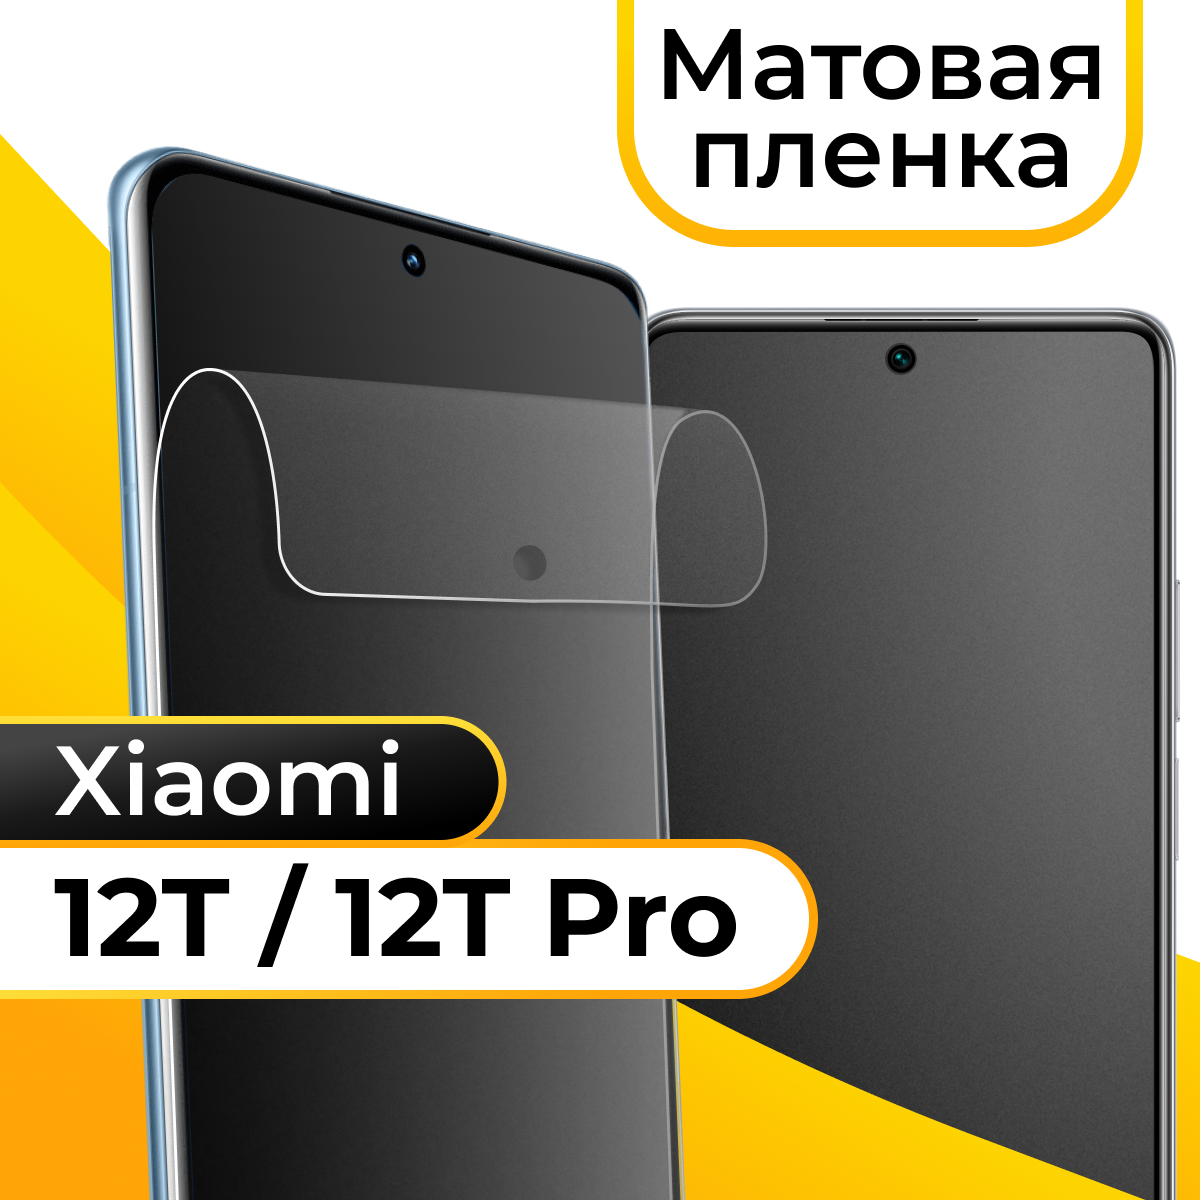 Комплект 2 шт. Матовая пленка для смартфона Xiaomi 12T и 12T Pro / Защитная противоударная пленка на телефон Сяоми 12Т и 12Т Про / Гидрогелевая пленка